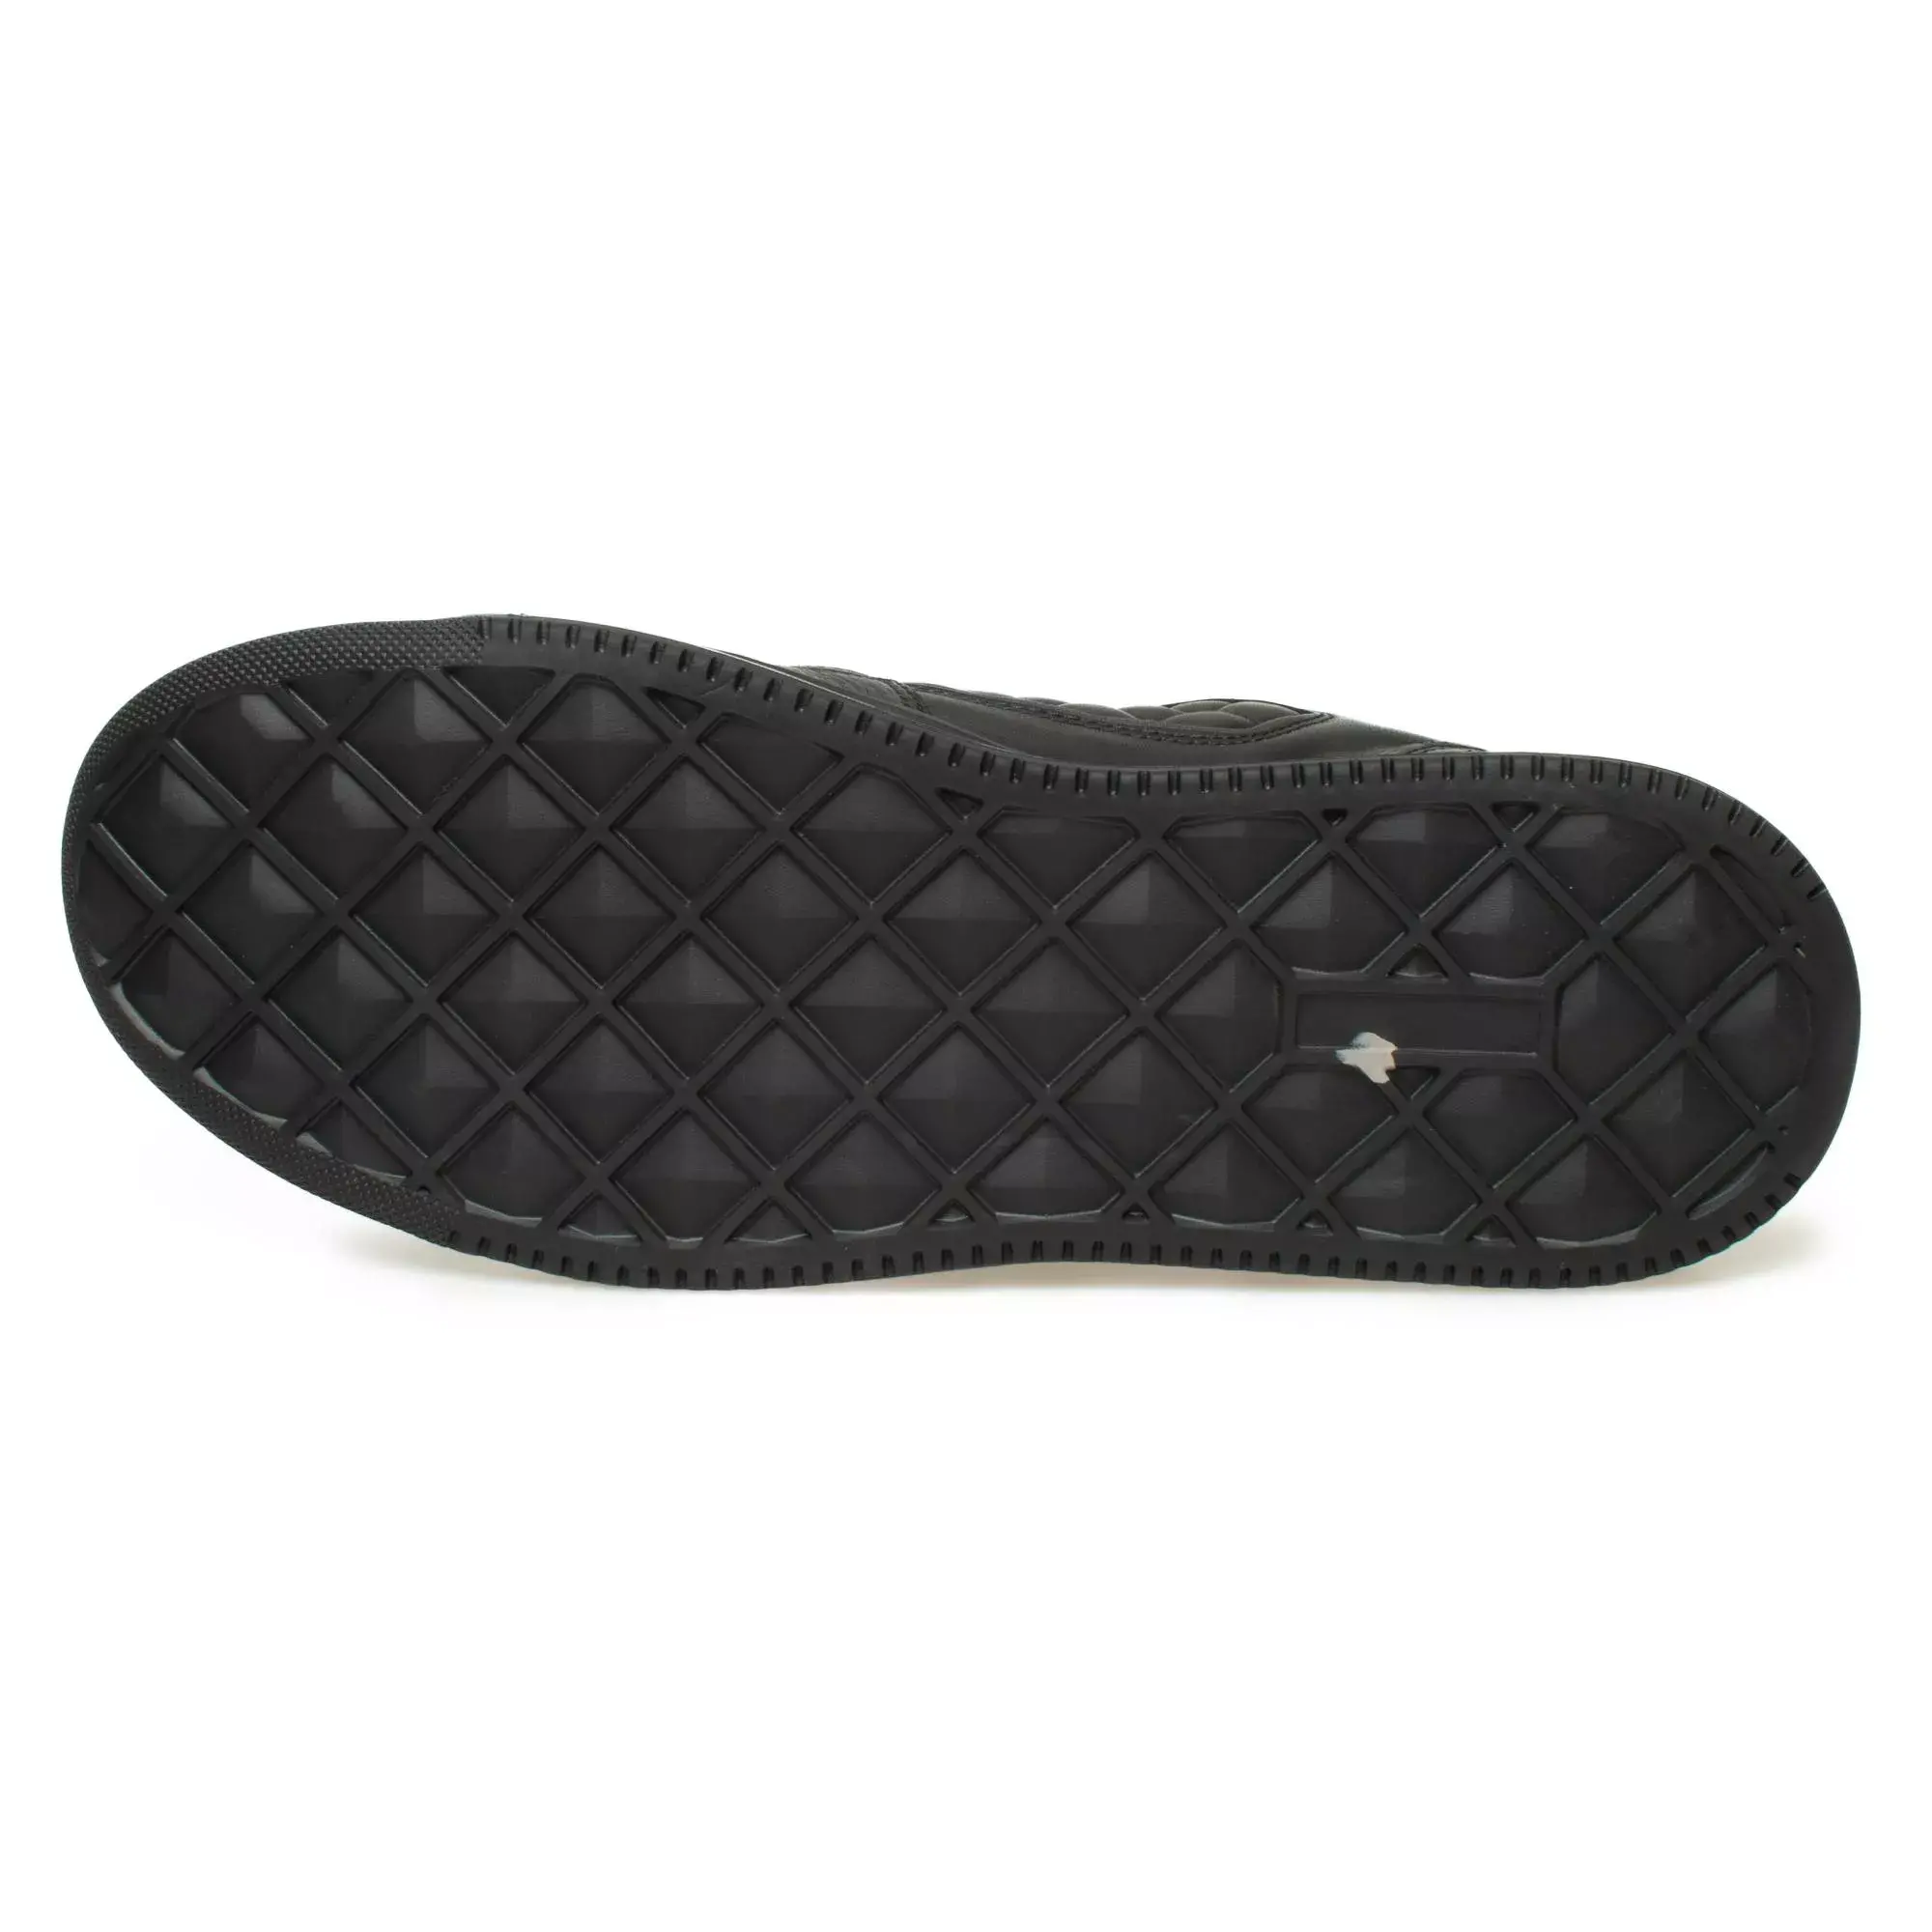 Greyder 3K1Sa17002 Sneaker Siyah Erkek Ayakkabı - 5